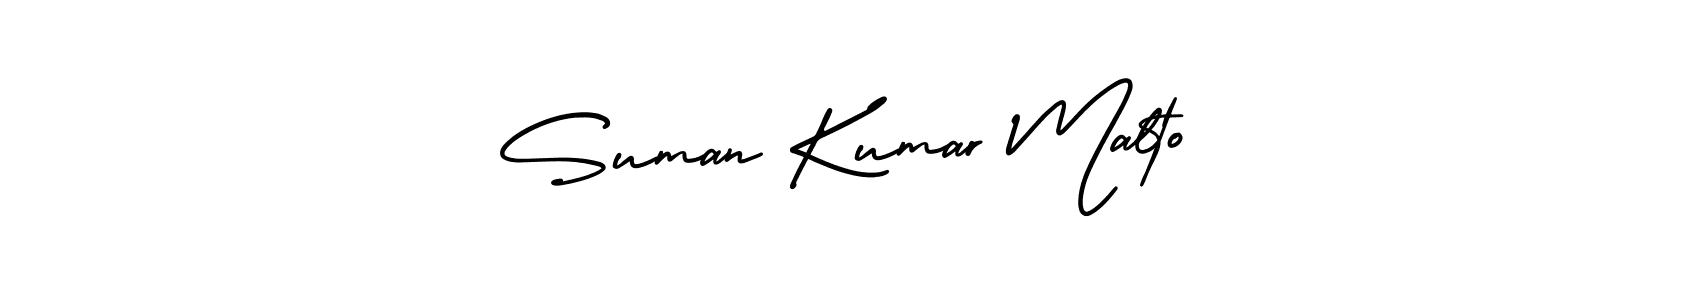 How to Draw Suman Kumar Malto signature style? AmerikaSignatureDemo-Regular is a latest design signature styles for name Suman Kumar Malto. Suman Kumar Malto signature style 3 images and pictures png